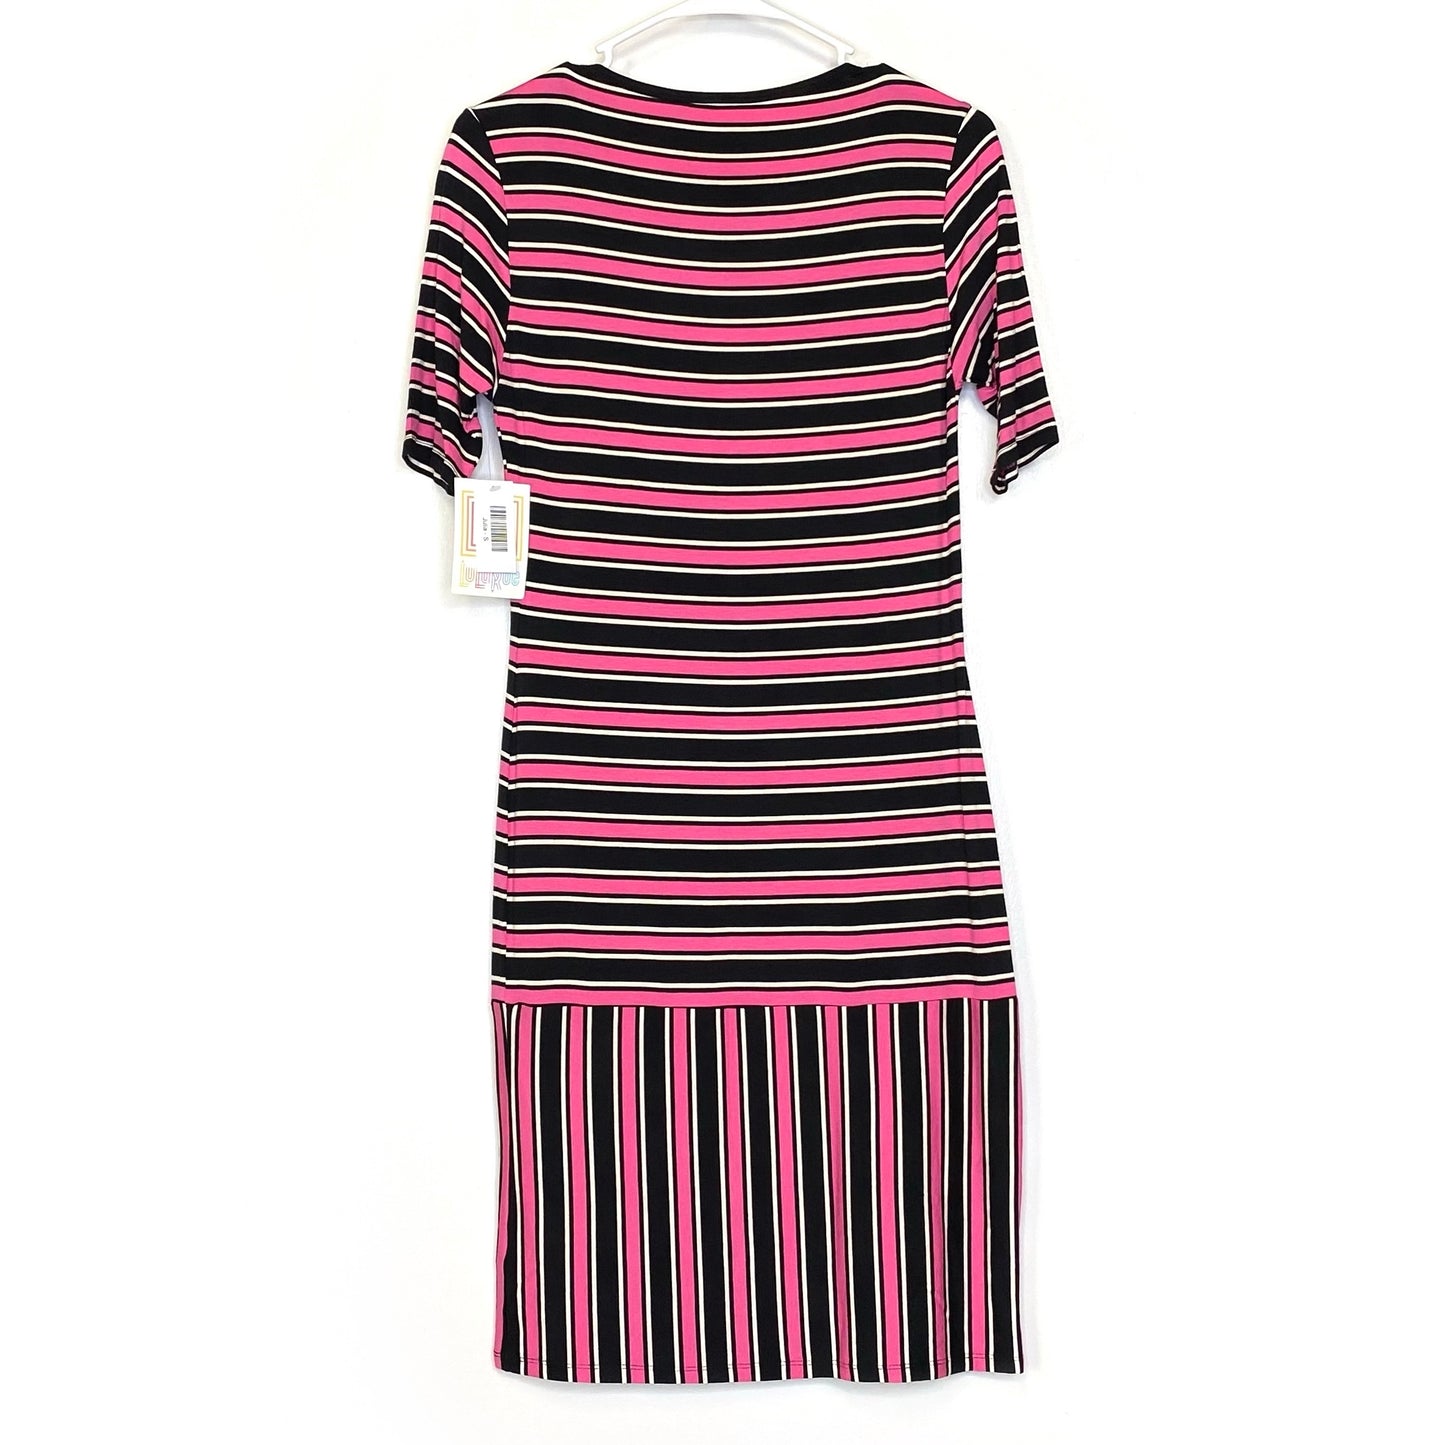 LuLaRoe Womens S Pink/Black/White Striped Julia Shift Dress Scoop Neck ½ Sleeves NWT